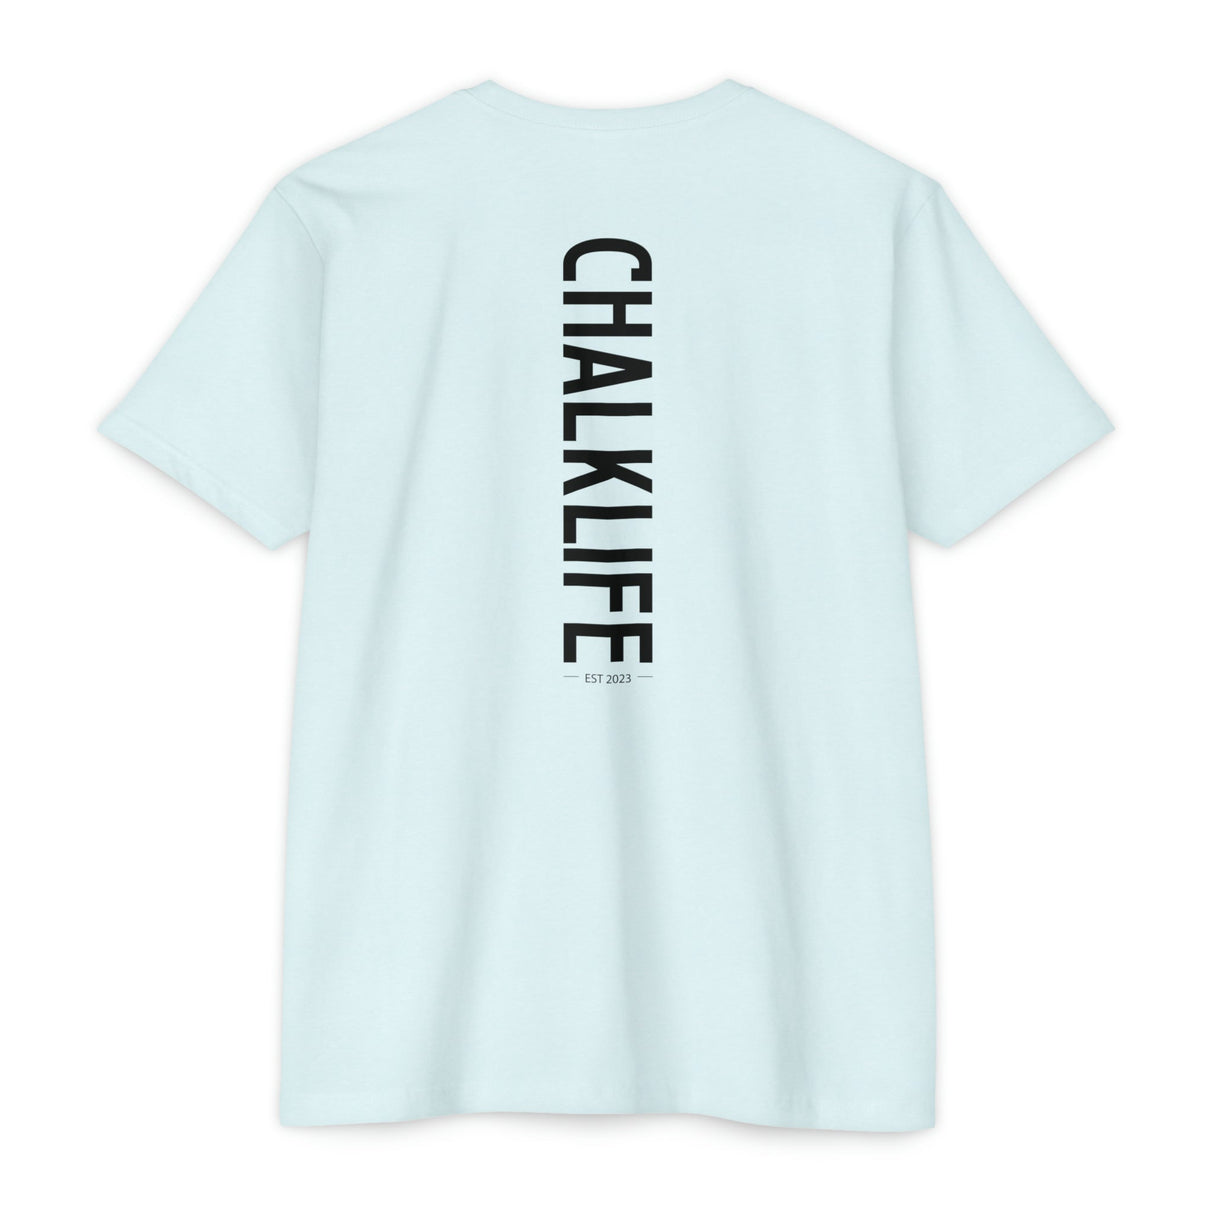 Chalklife Ultimate Rock Climber's T-Shirt - Chalklife, LLC